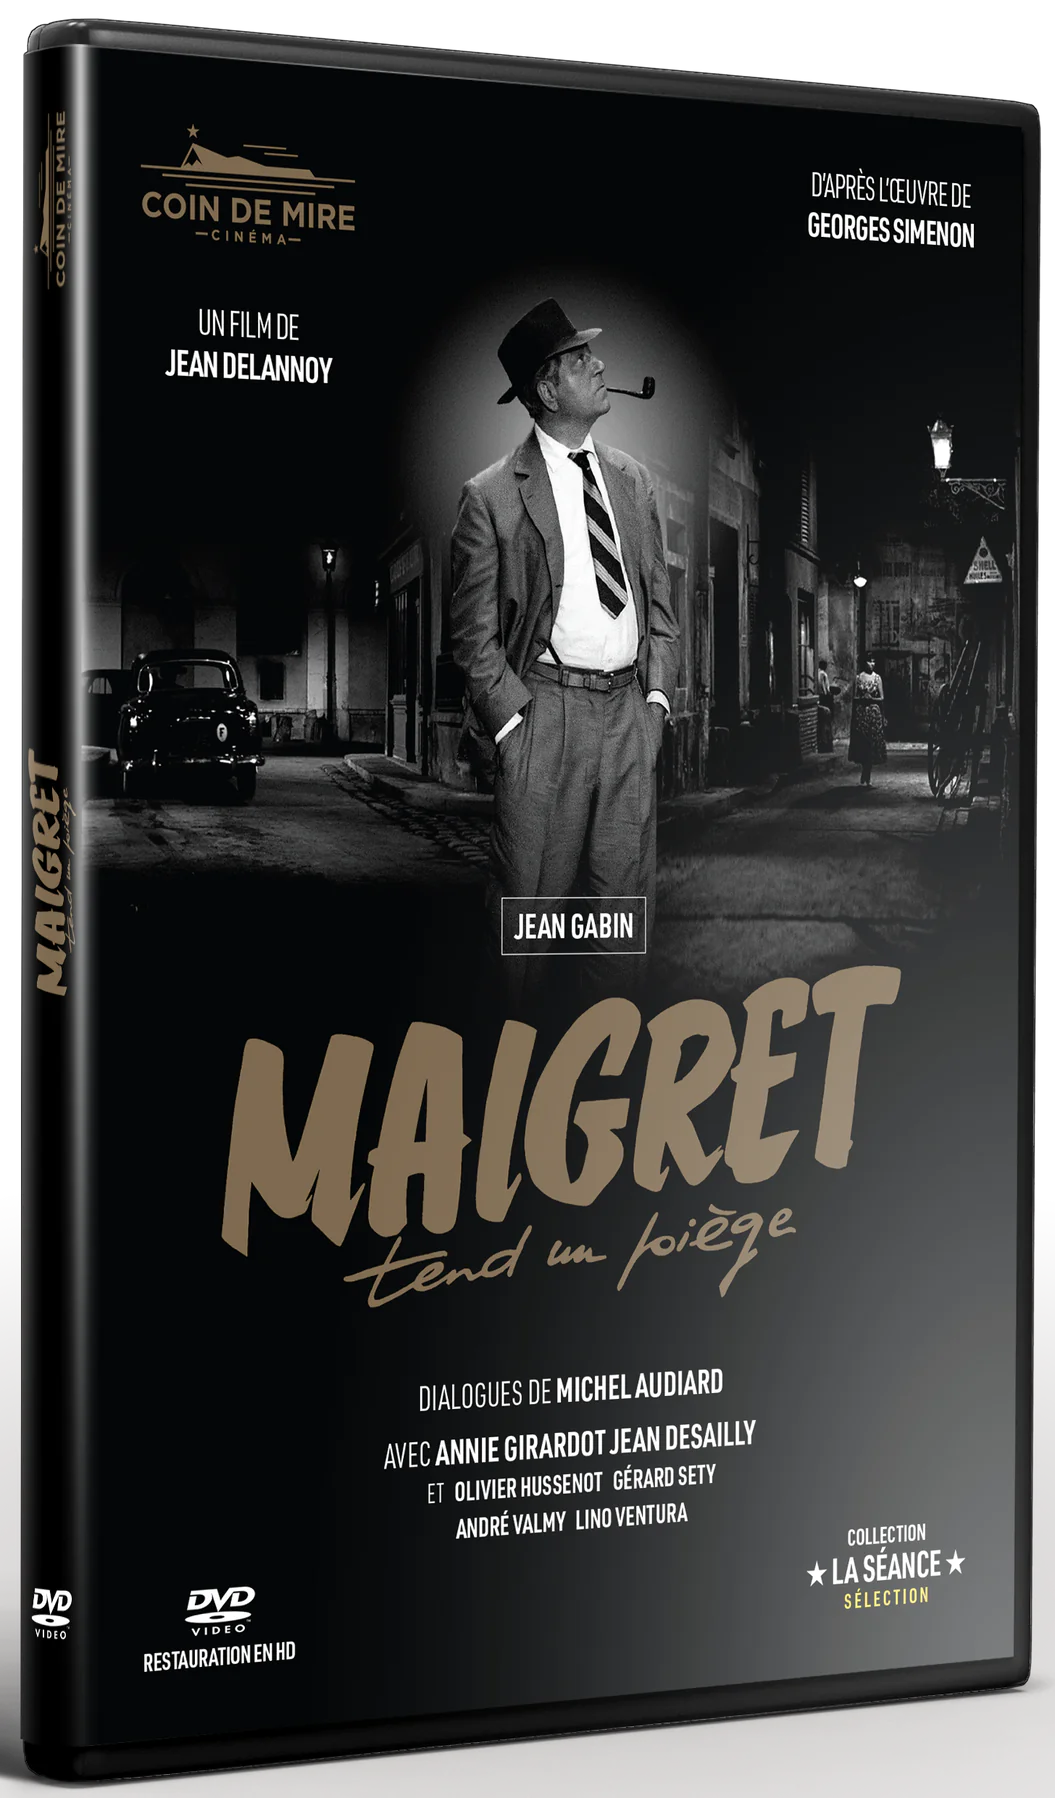 MAIGRET TEND UN PIEGE [DVD]